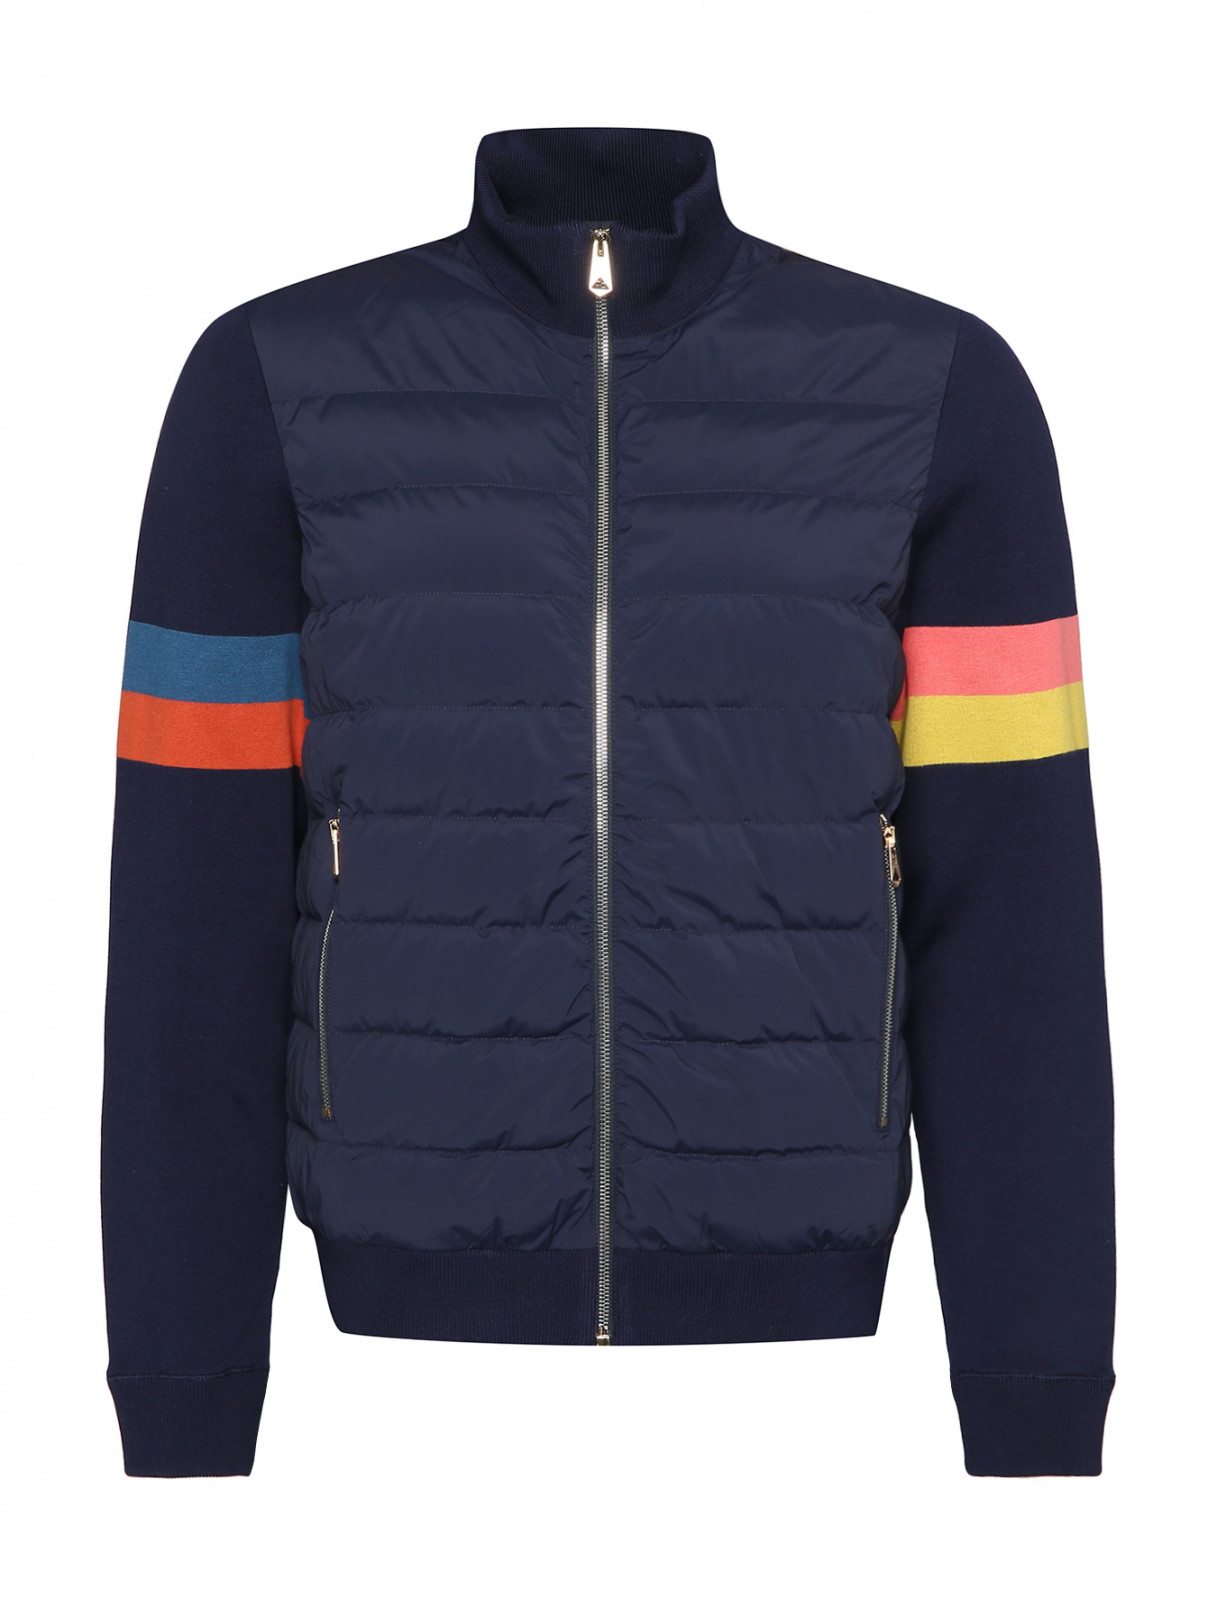 Куртка на молнии с карманами Paul Smith  –  Общий вид  – Цвет:  Синий